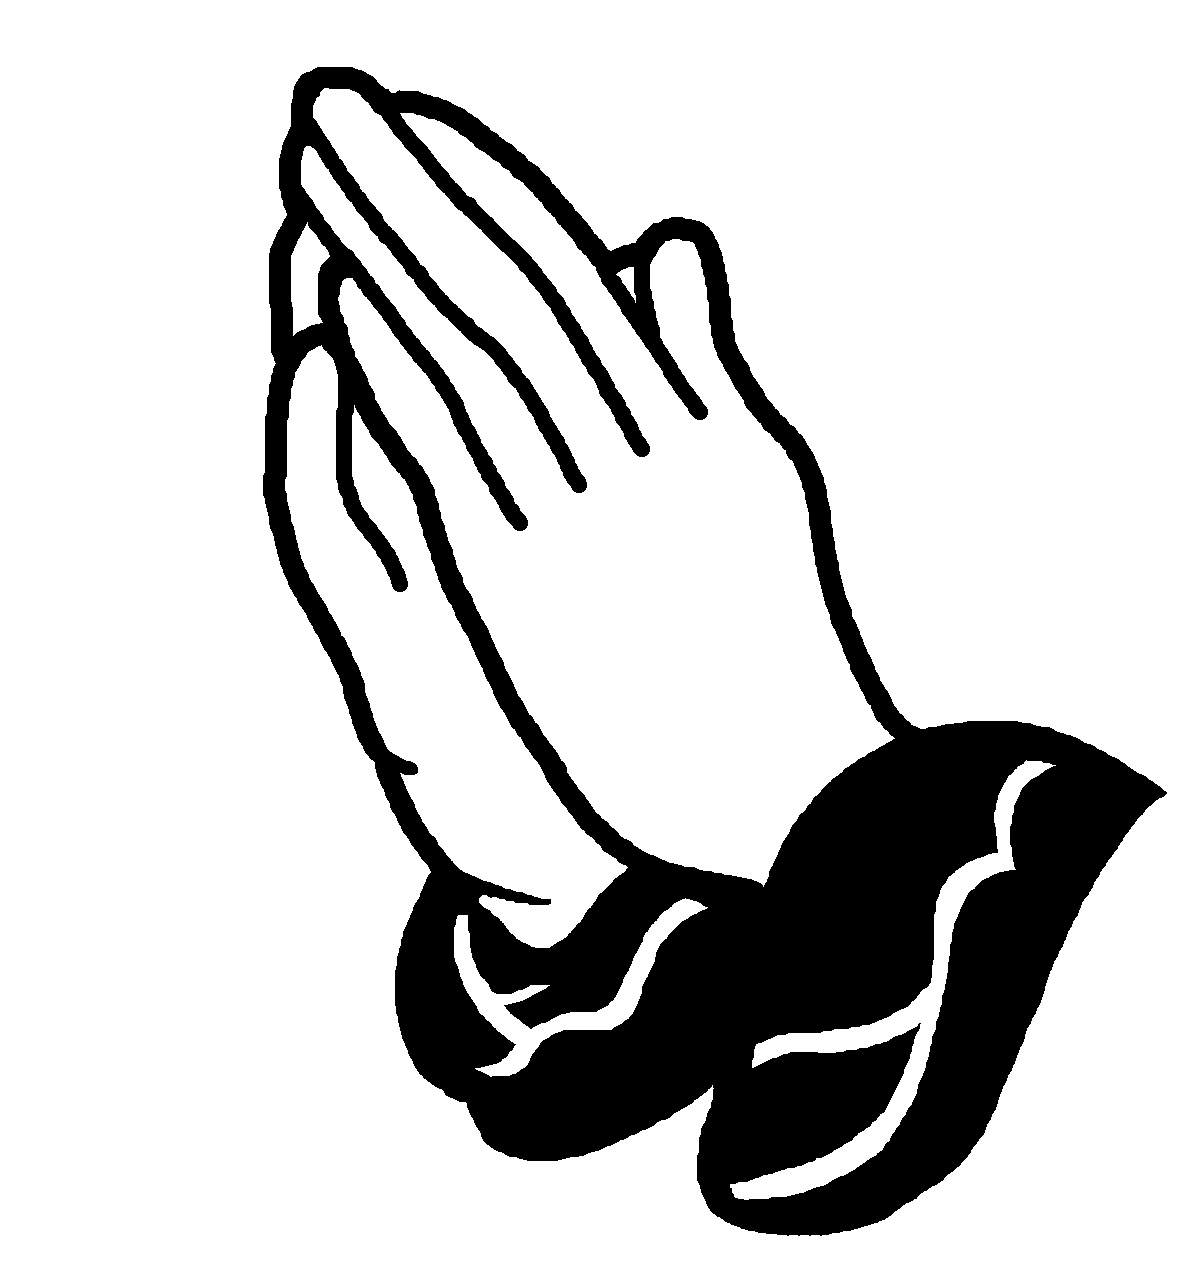 Best praying hands.